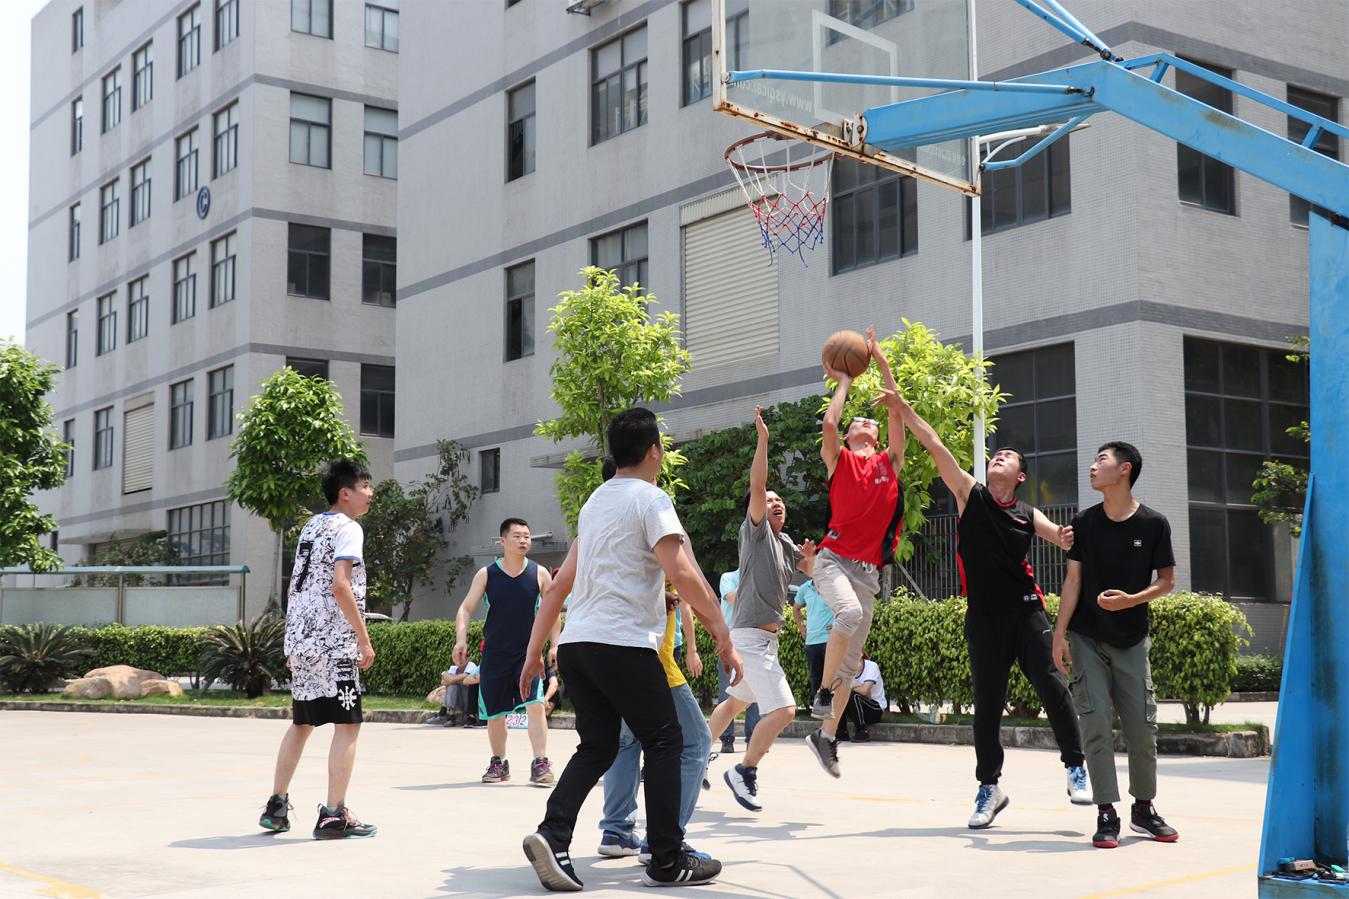 make-sports-meet-full-fitness-happy-work-and-healthy-life-basket.jpg